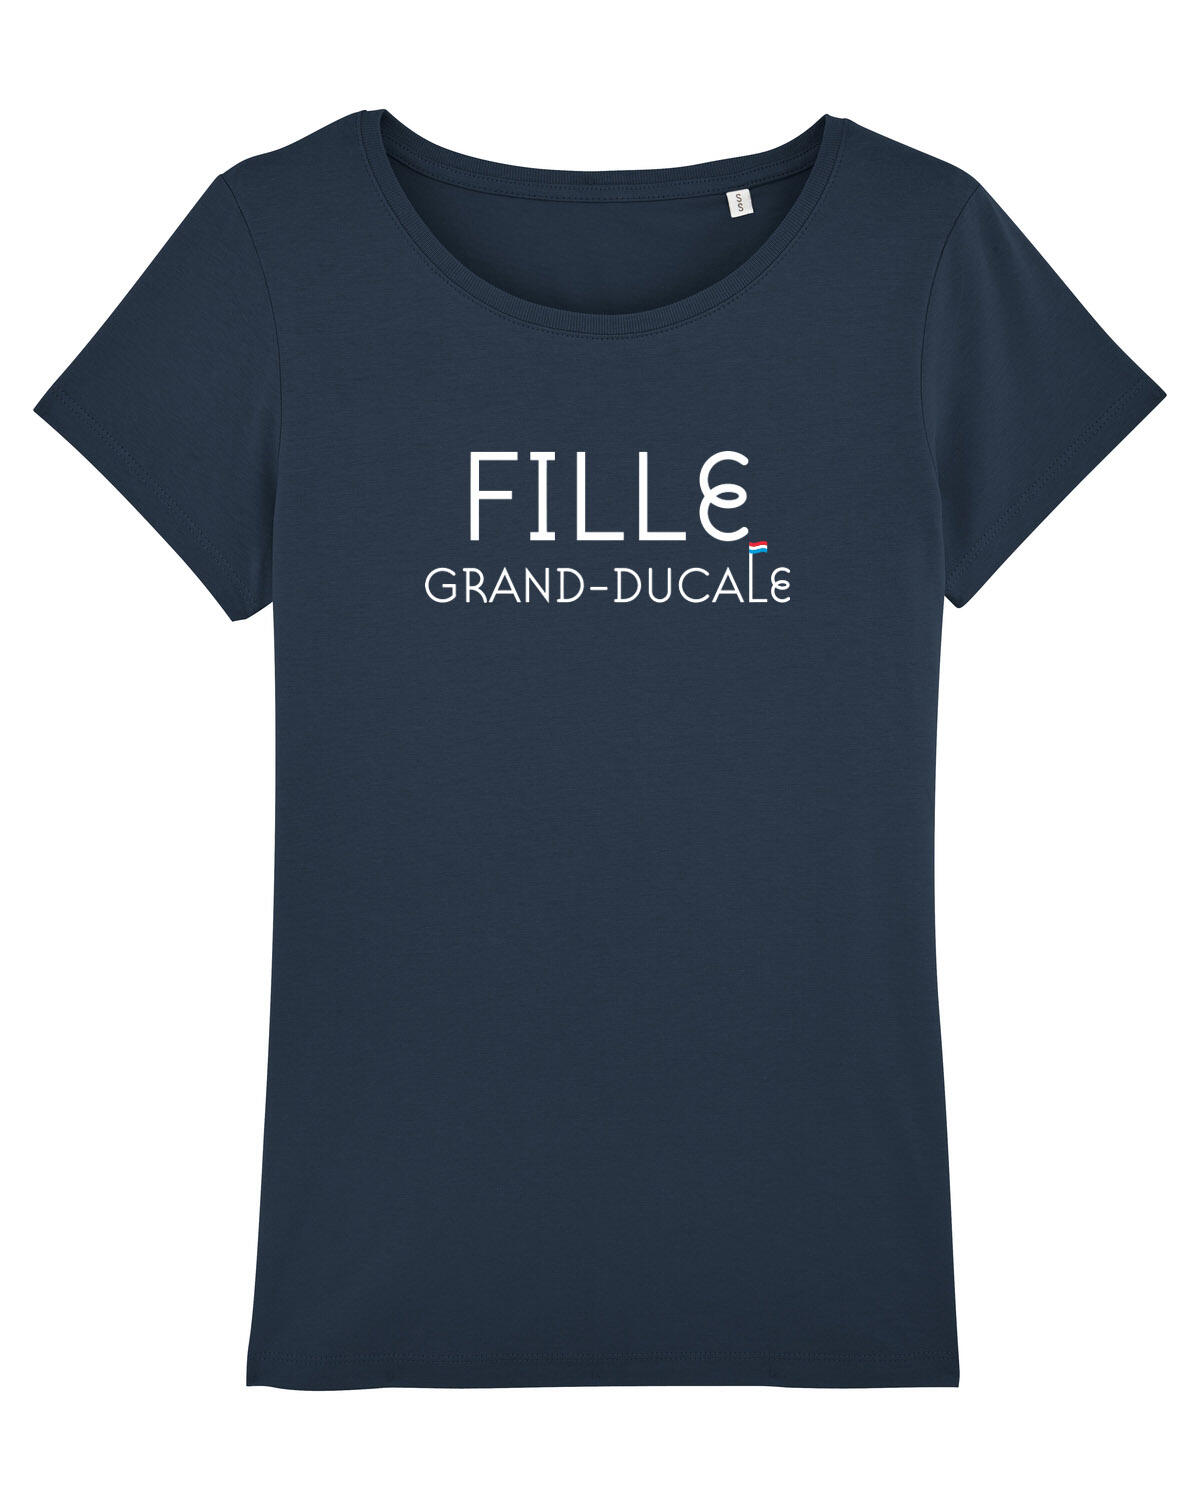 Tee shirt "grand-ducal girl" navy